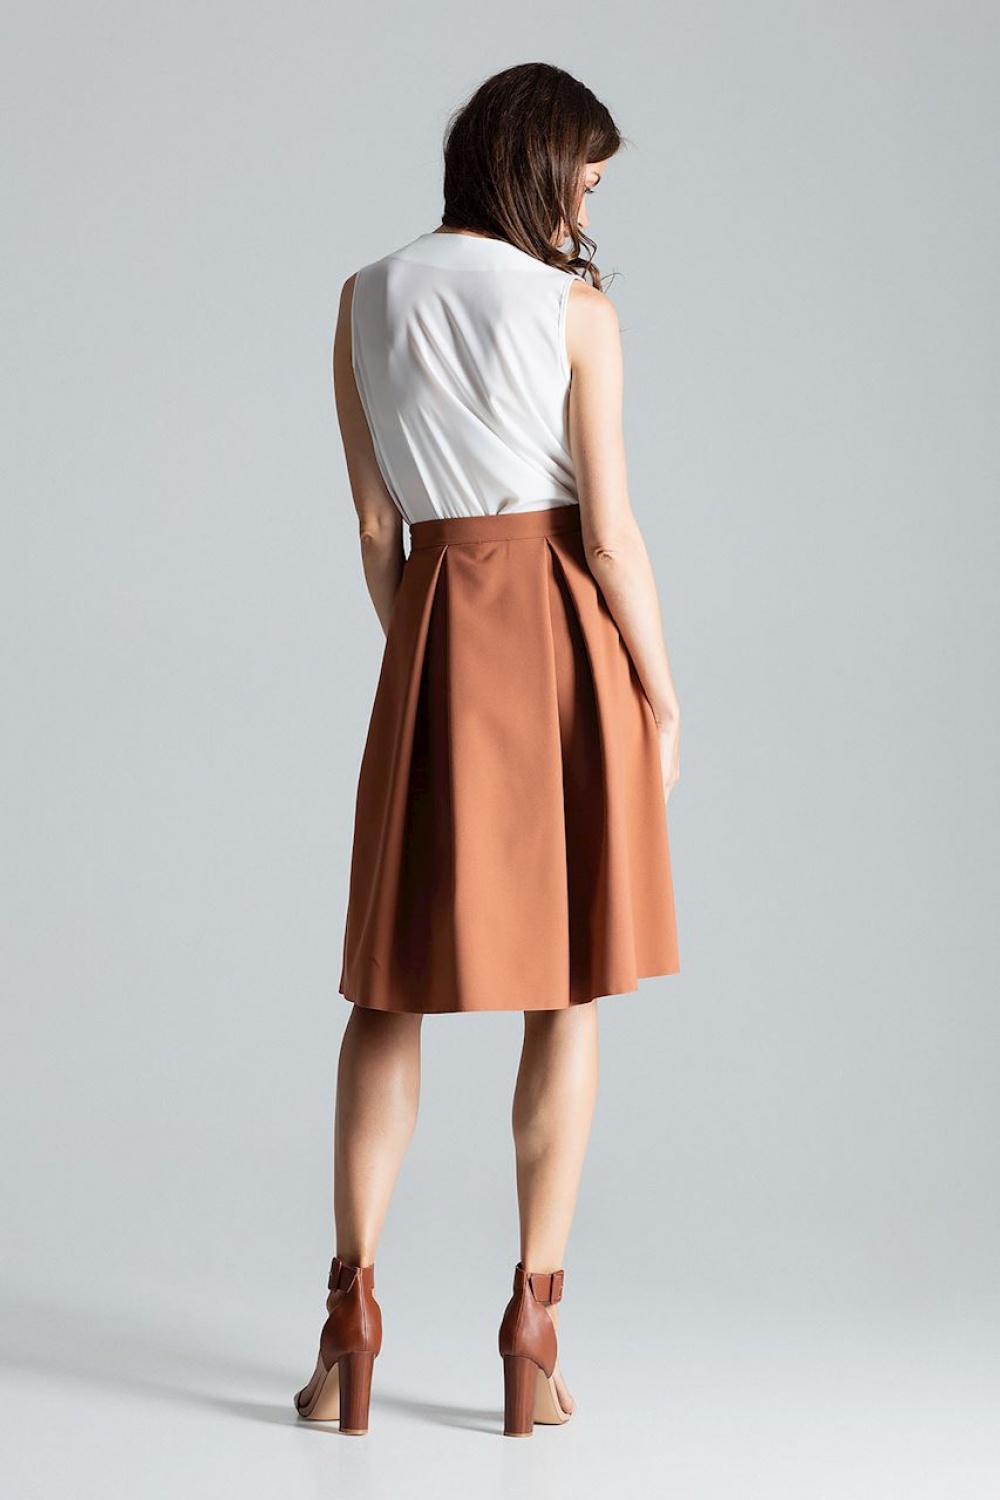  Skirt model 135789 Figl  brown